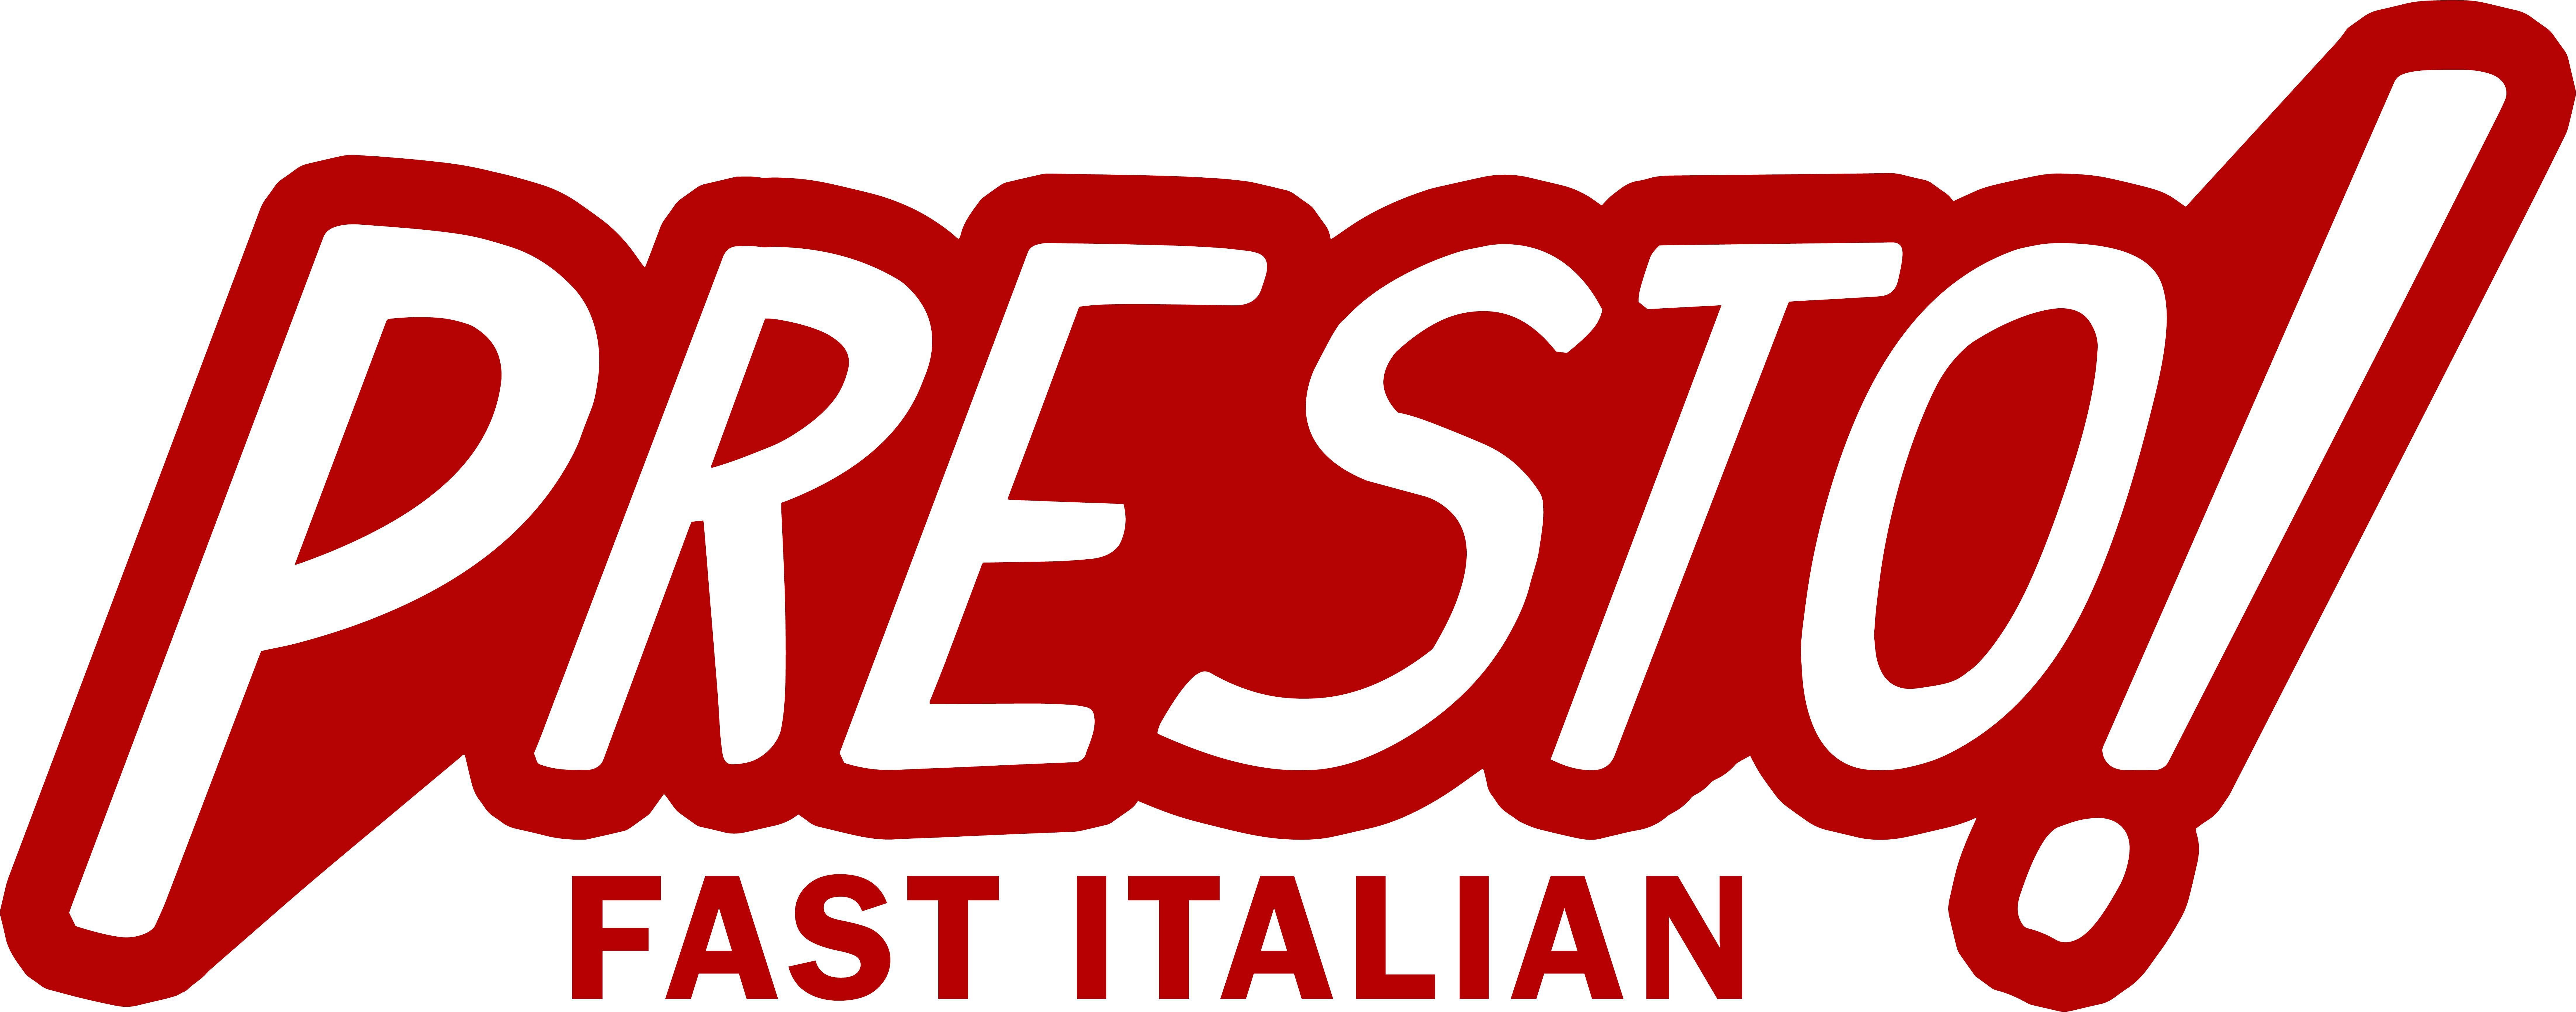 Presto Fast Italian Logo